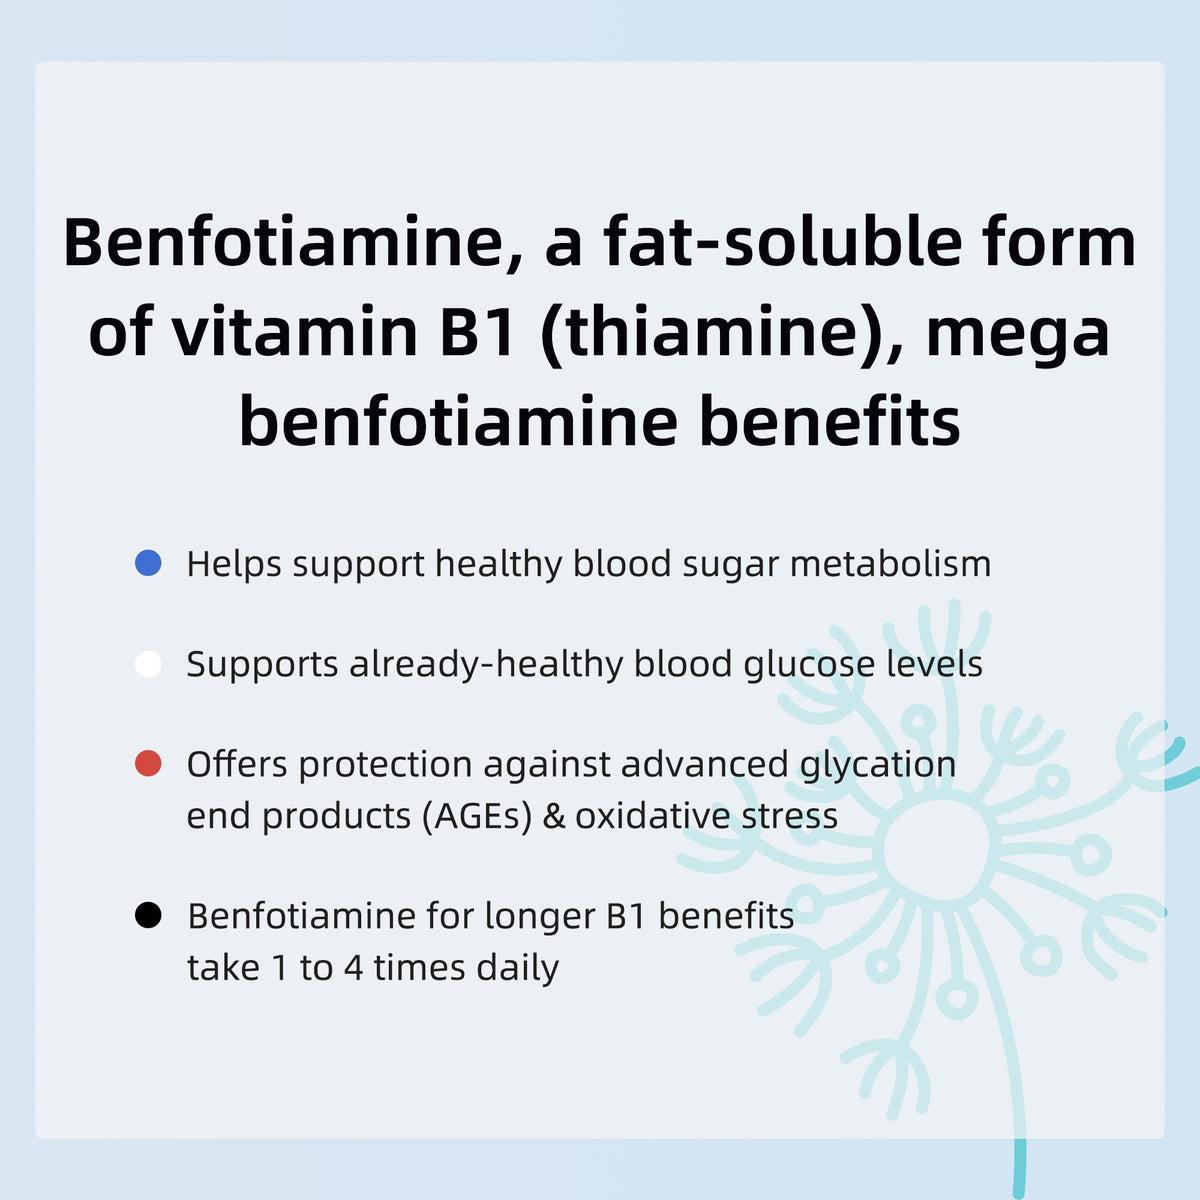 500 mg benfotiamine,a Fat-Soluble Form of thiamine,Ultra-bioavailable Vitamin B1, high Potency, Gluten-Free, Non-GMO, Vegetarian 120 Capsules